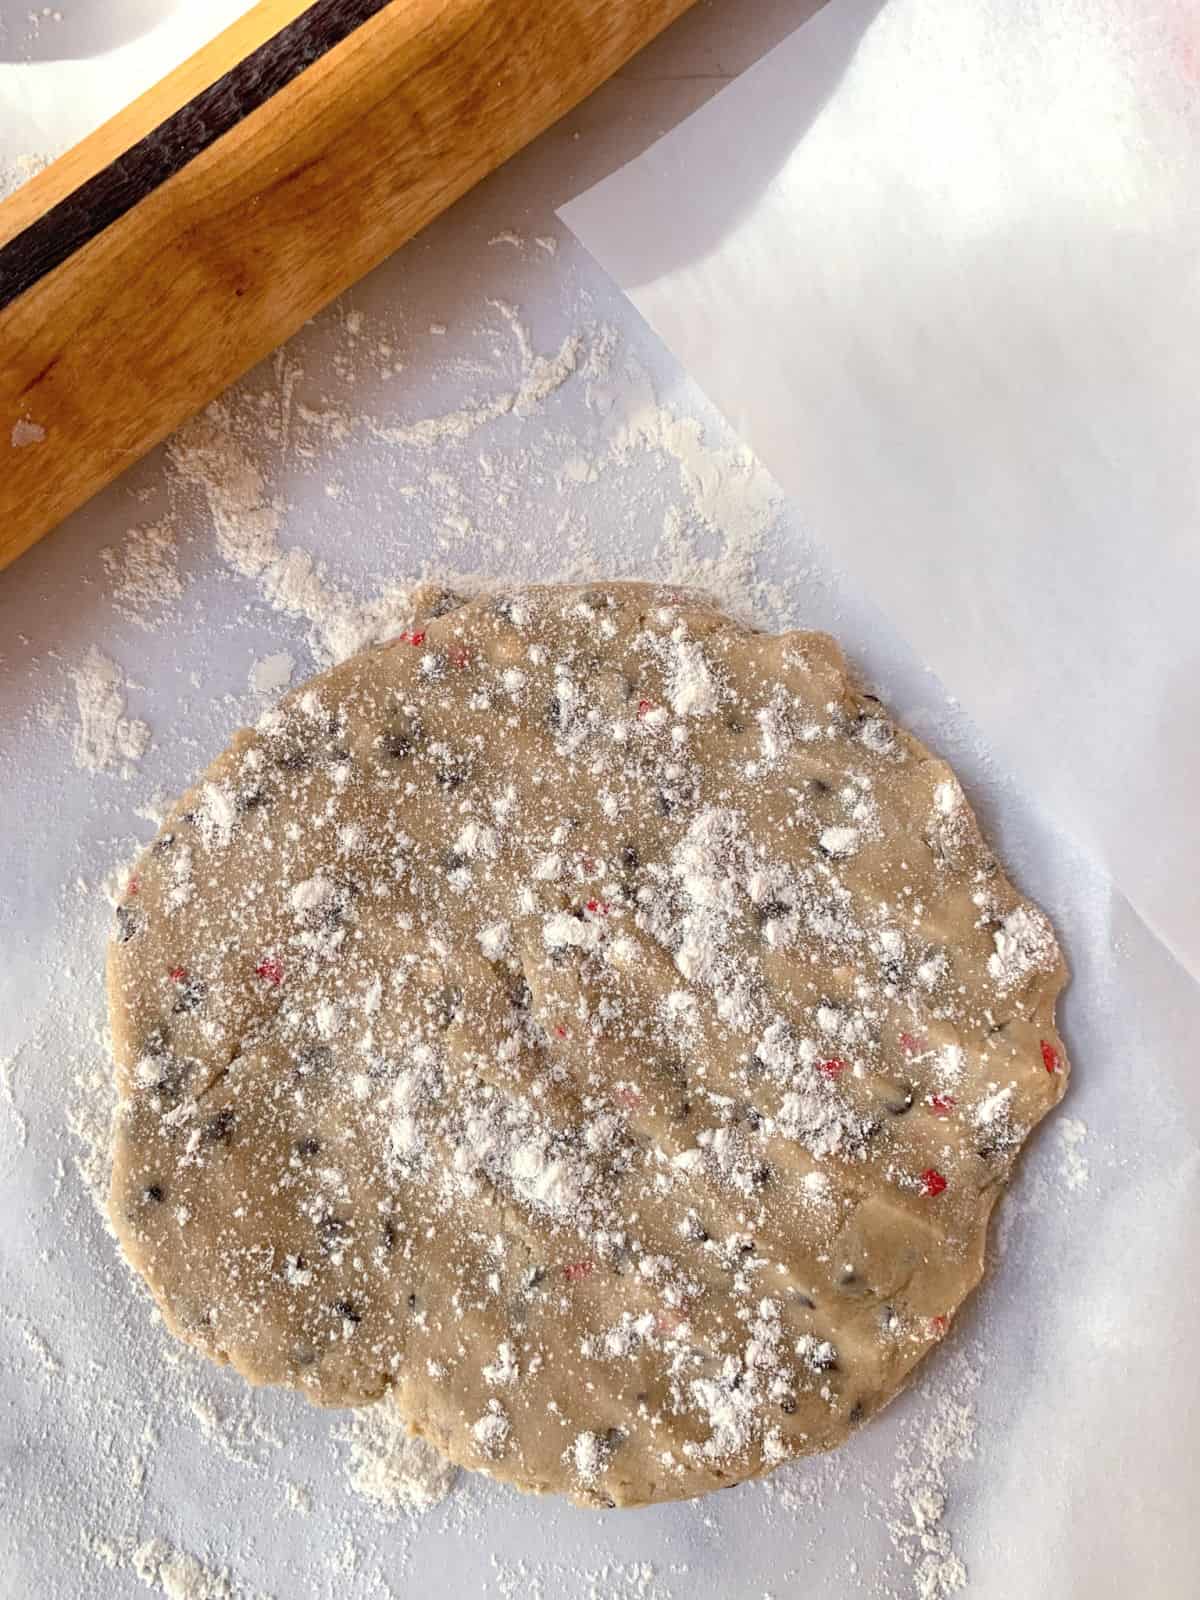 Cookie dough on a floured board.